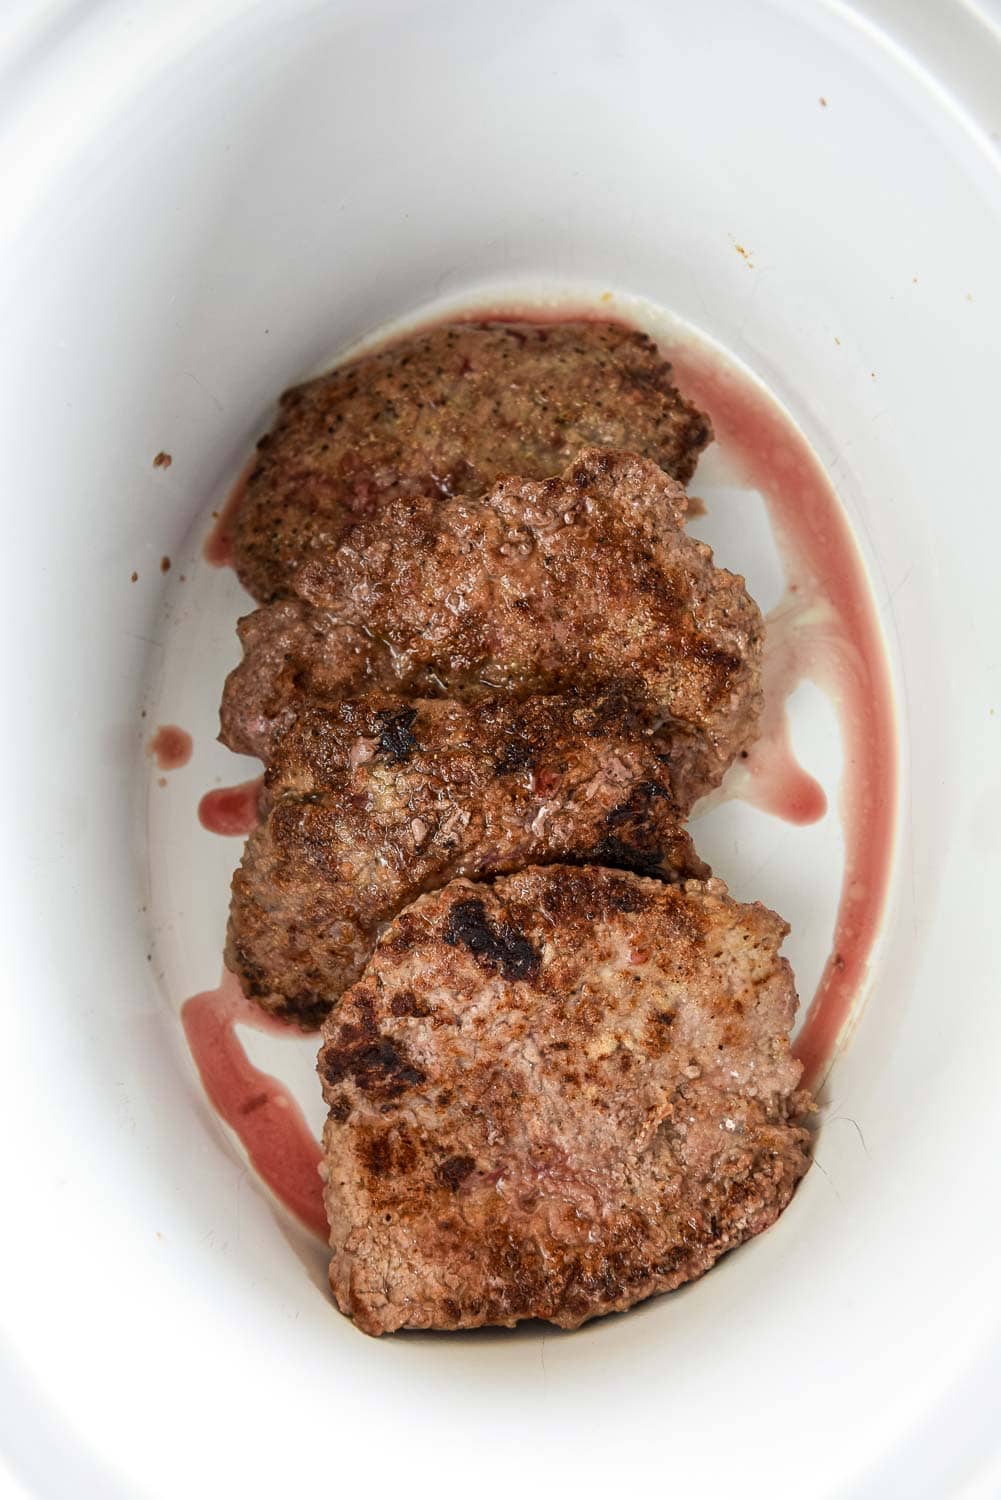 Cooked swiss steak in slow cooker